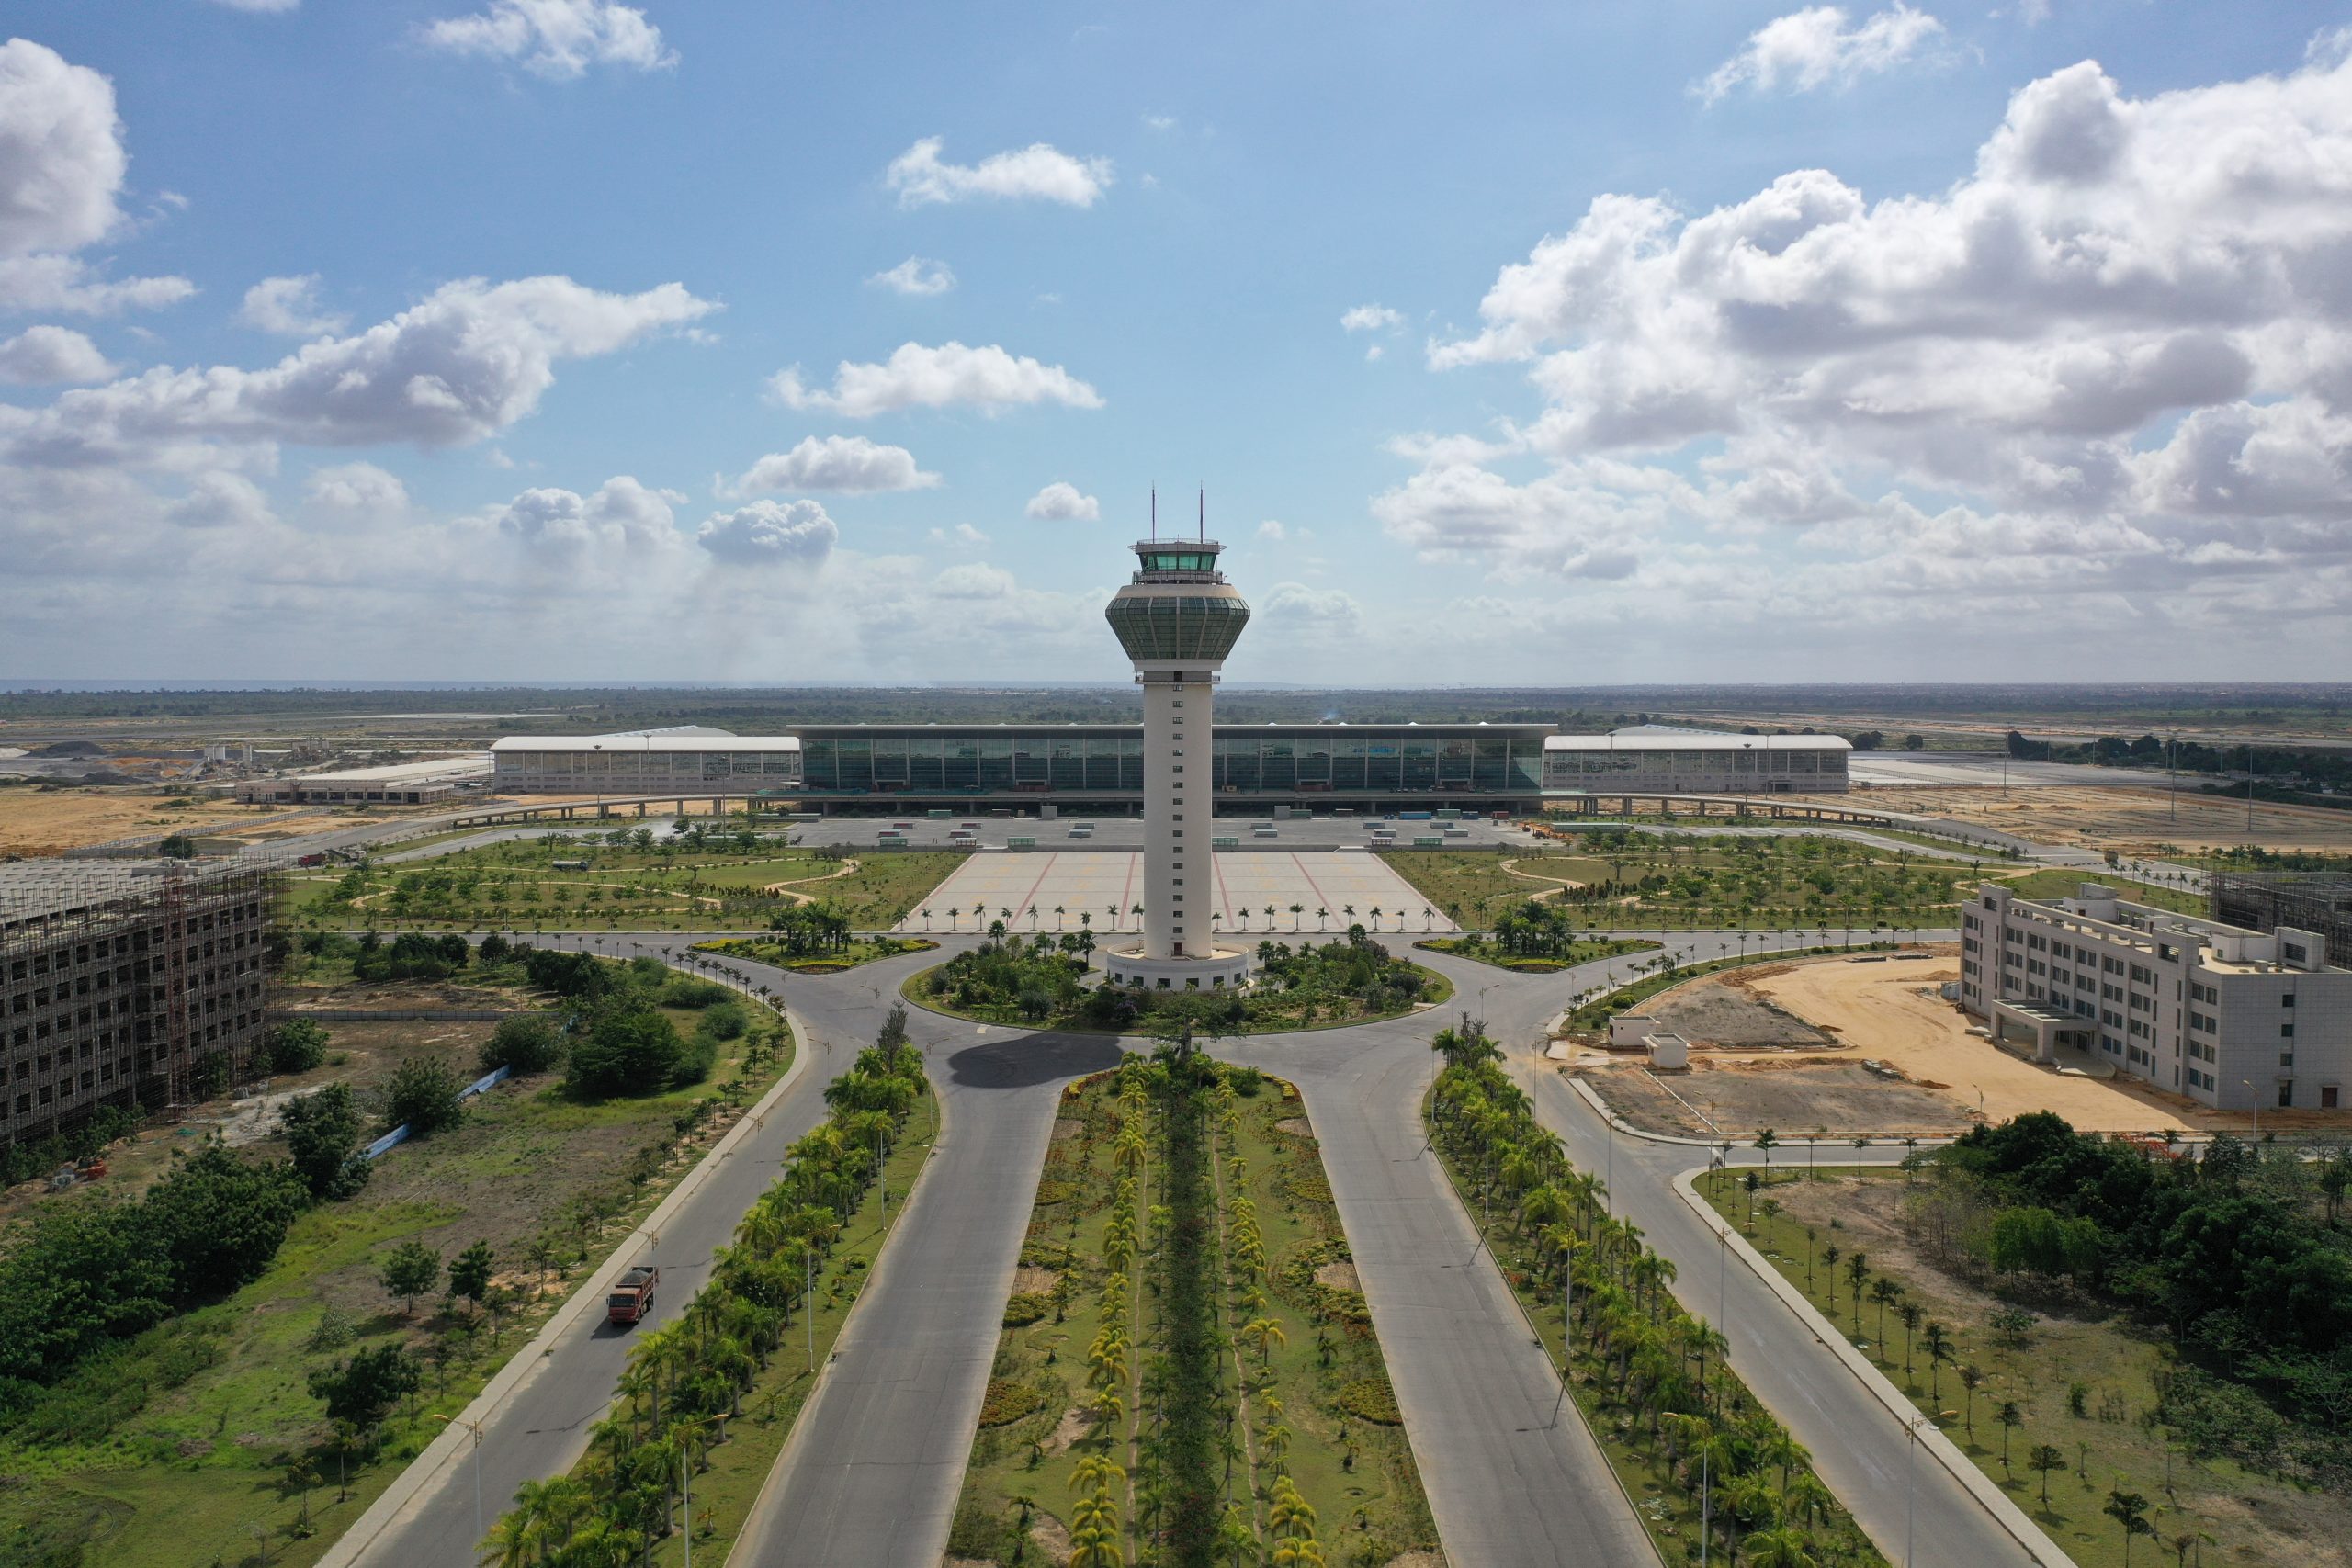 Agostinho Neto International Airport Angola